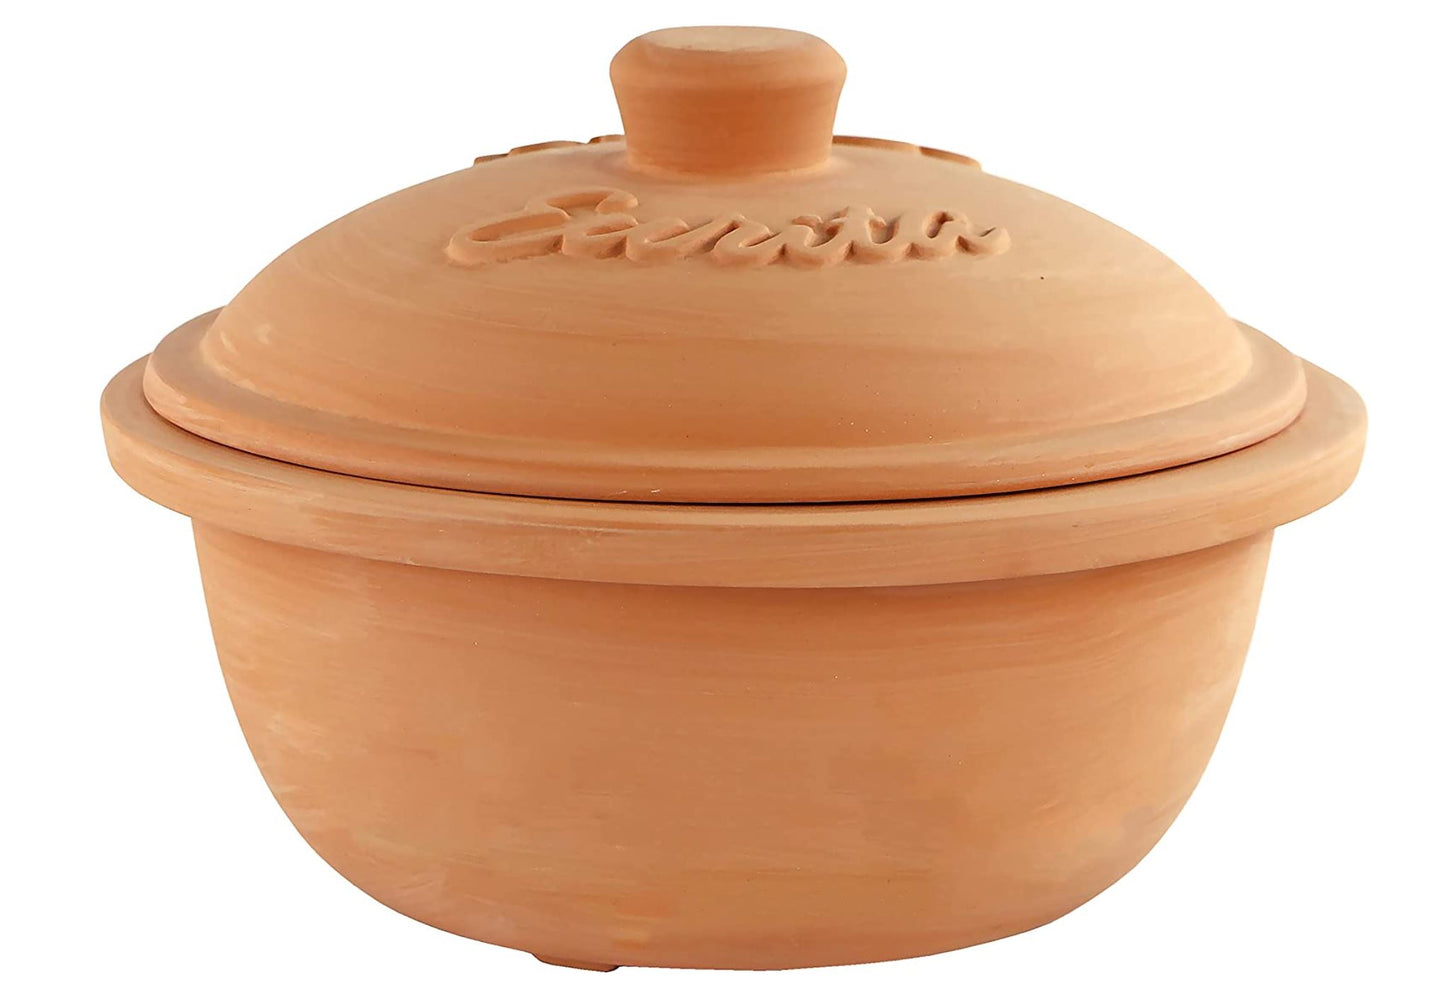 Eurita Round Clay Cooking Pot and Roaster - 2 Quart